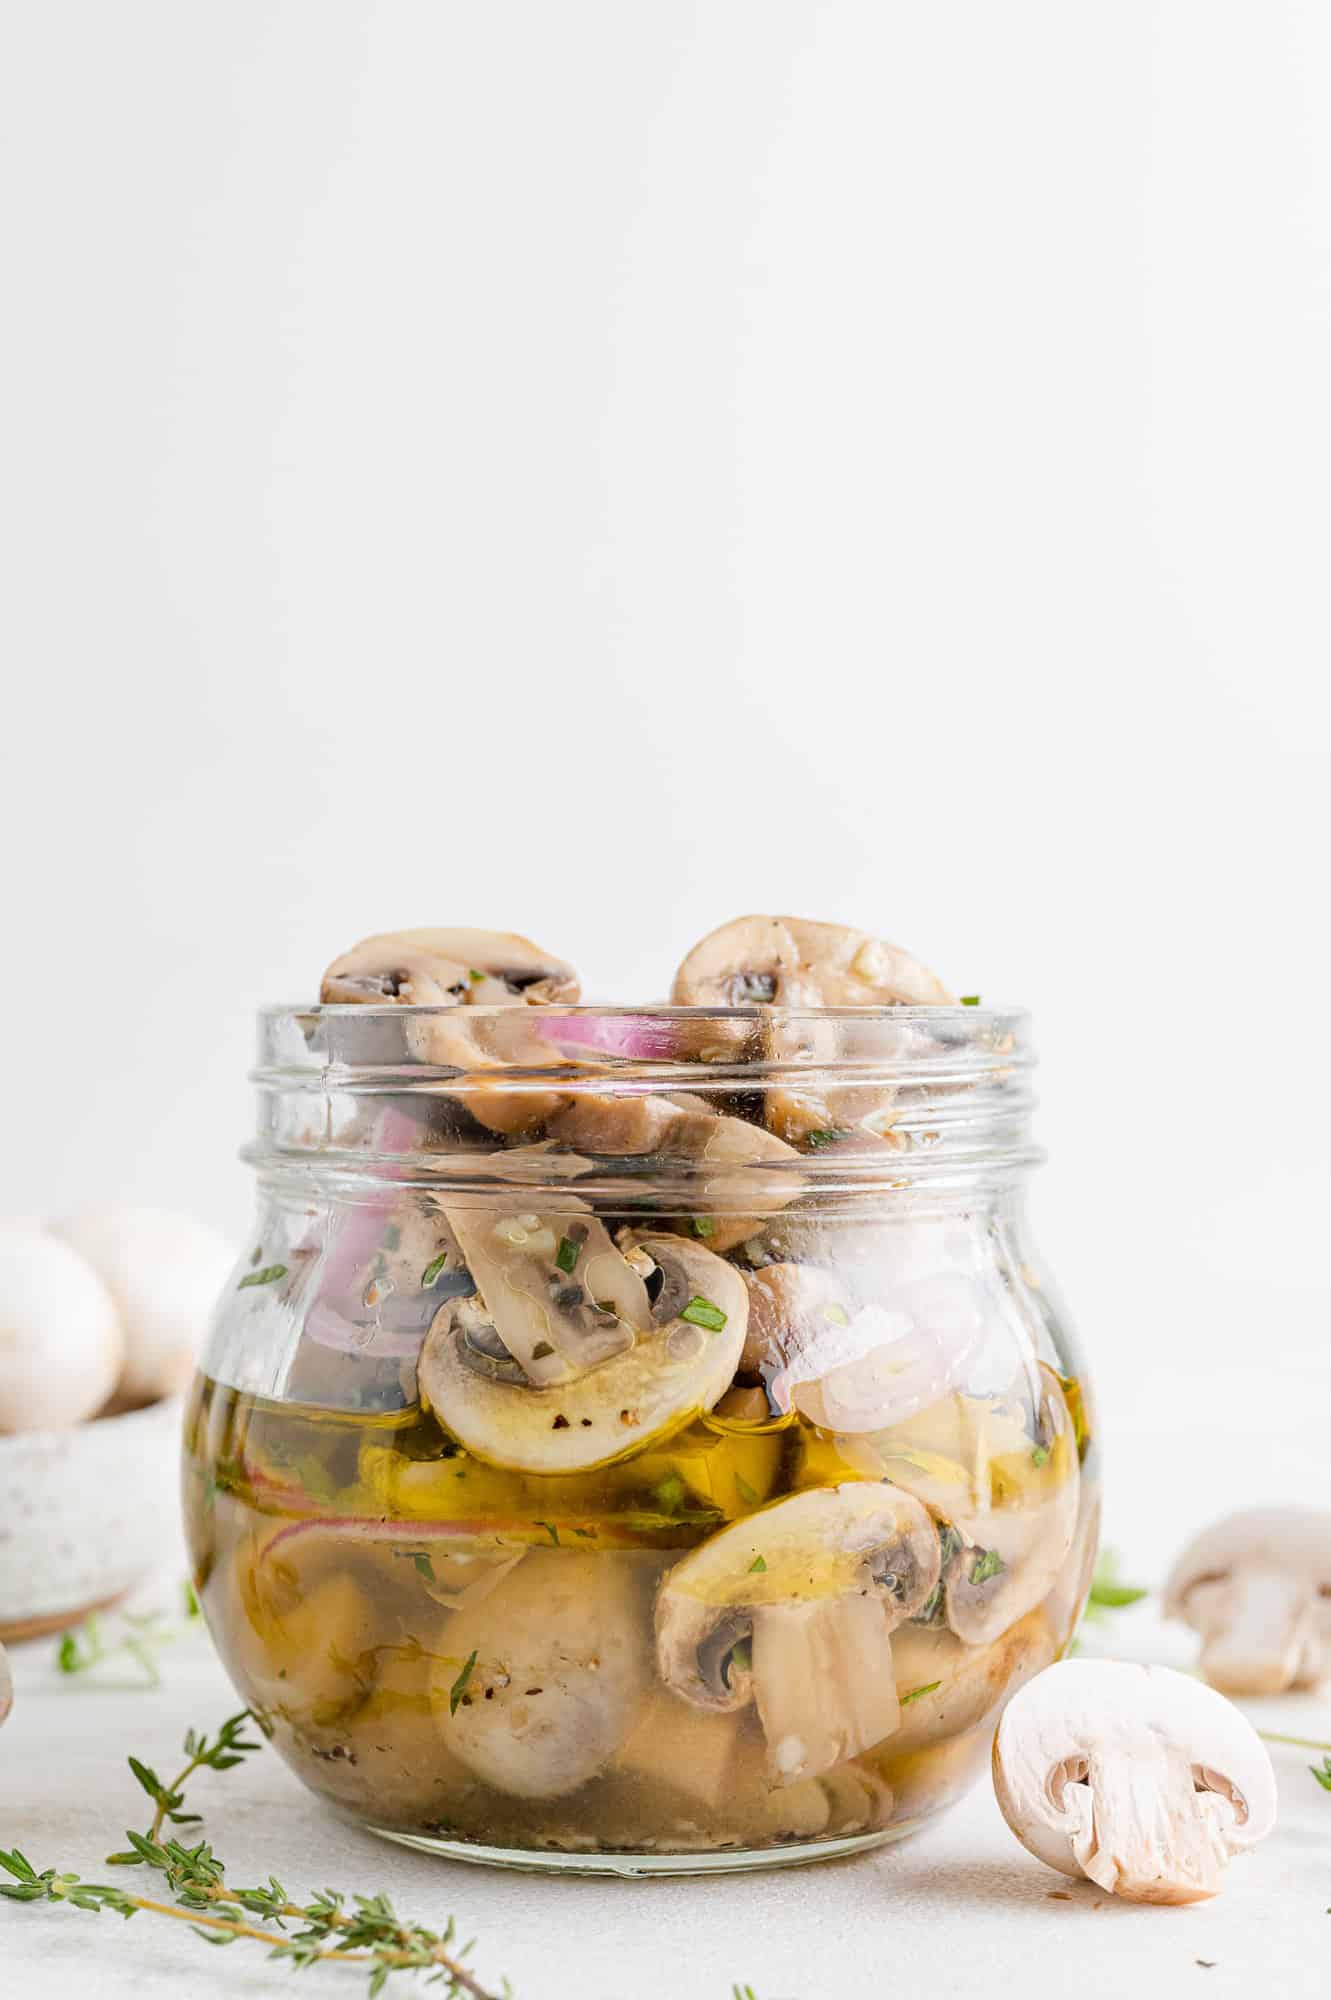 Marinated mushrooms in a small jar.